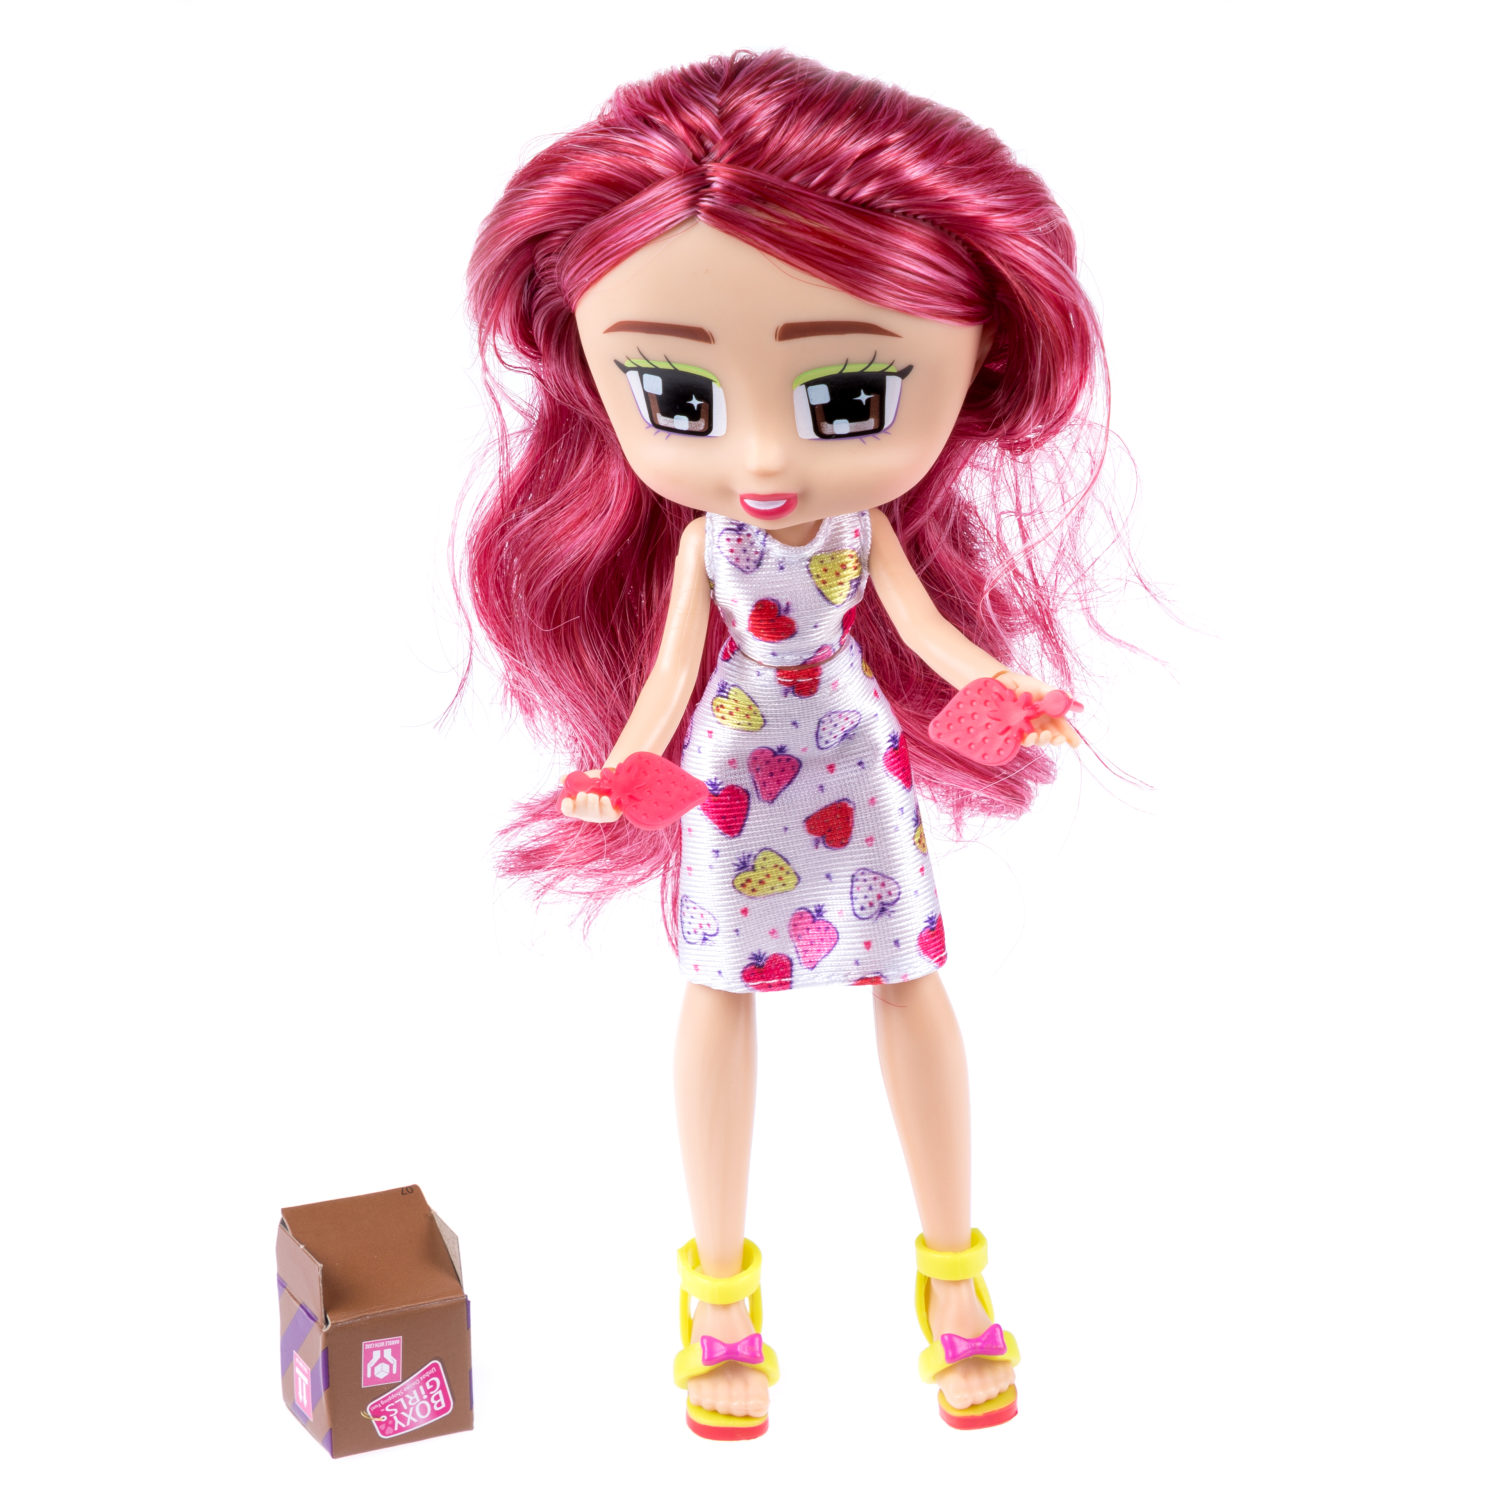 Кукла Boxy Girls - Apple 20 см с аксессуаром в 1 коробочке  